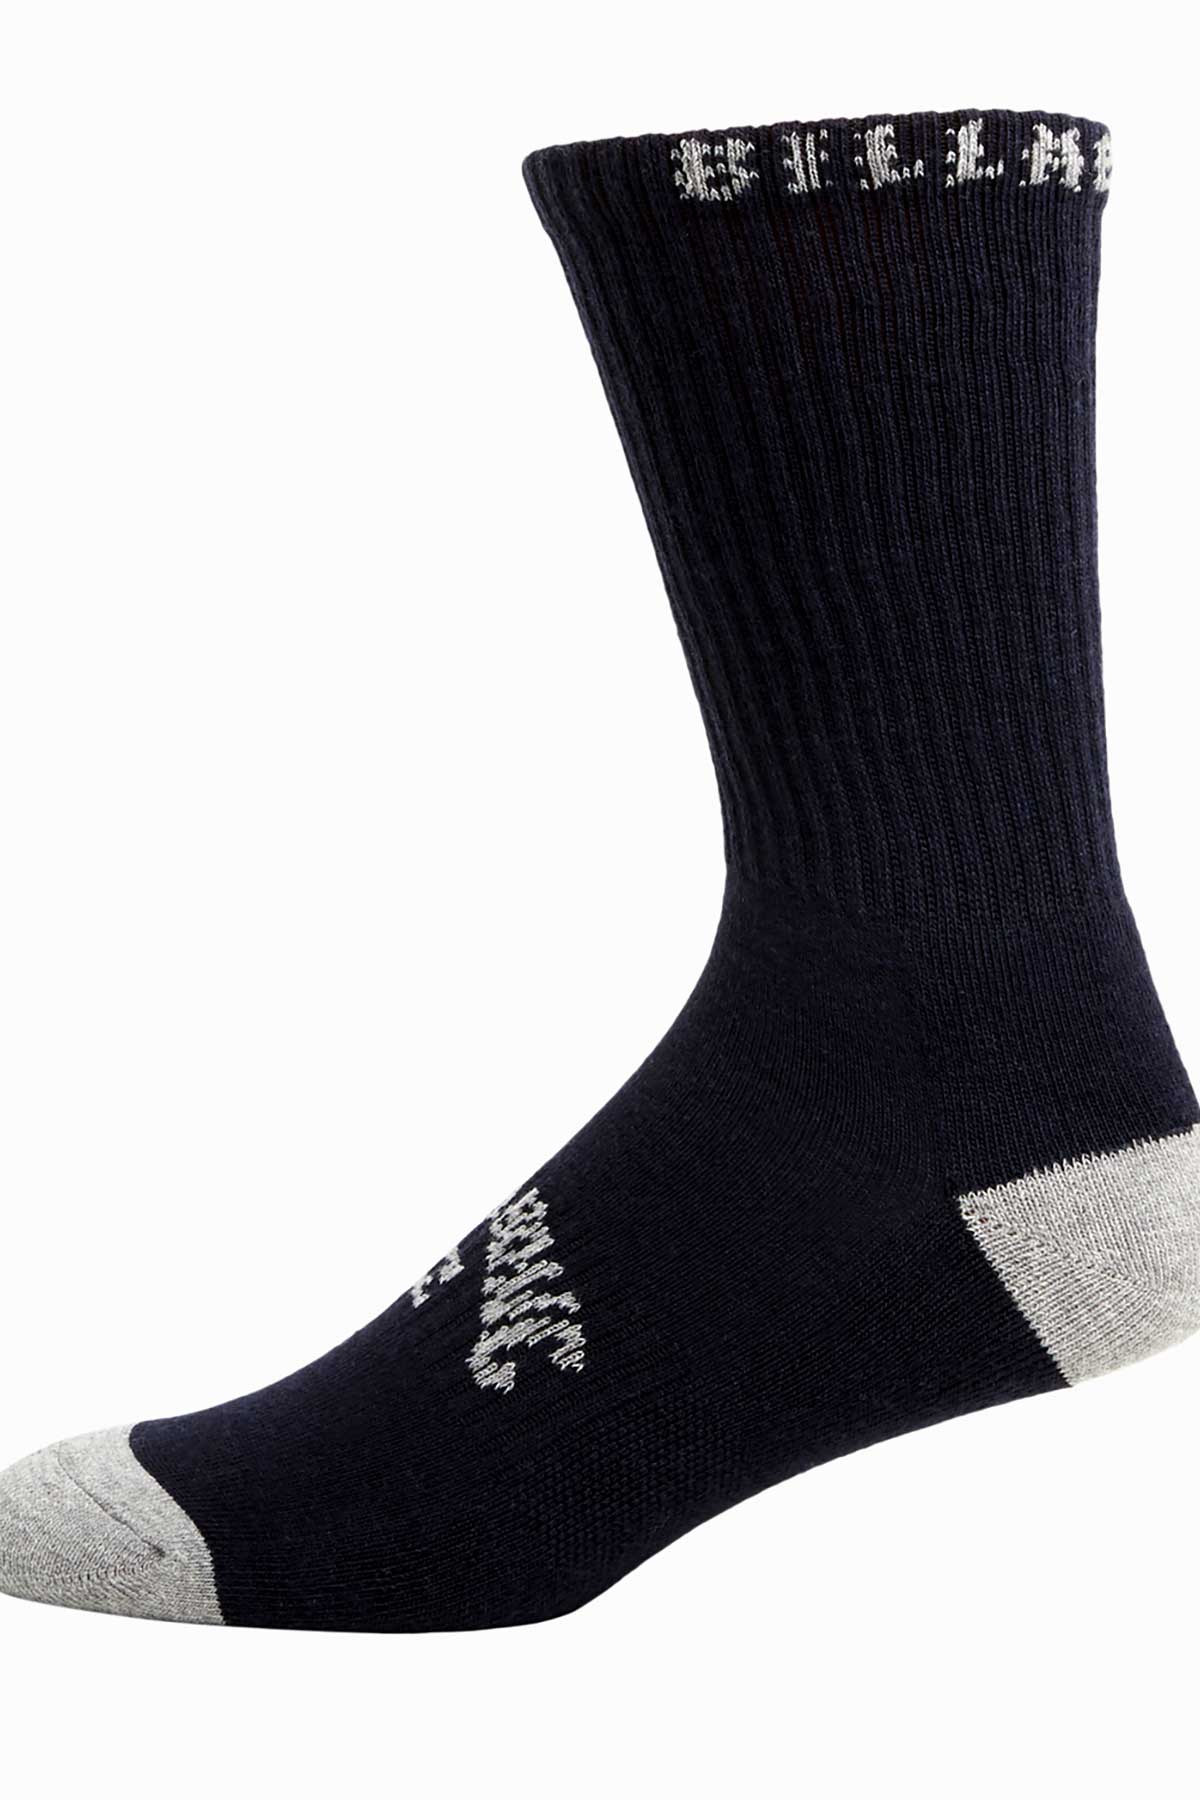 Billabong Sport Socks - 5 Pack Multi, Black and Grey.